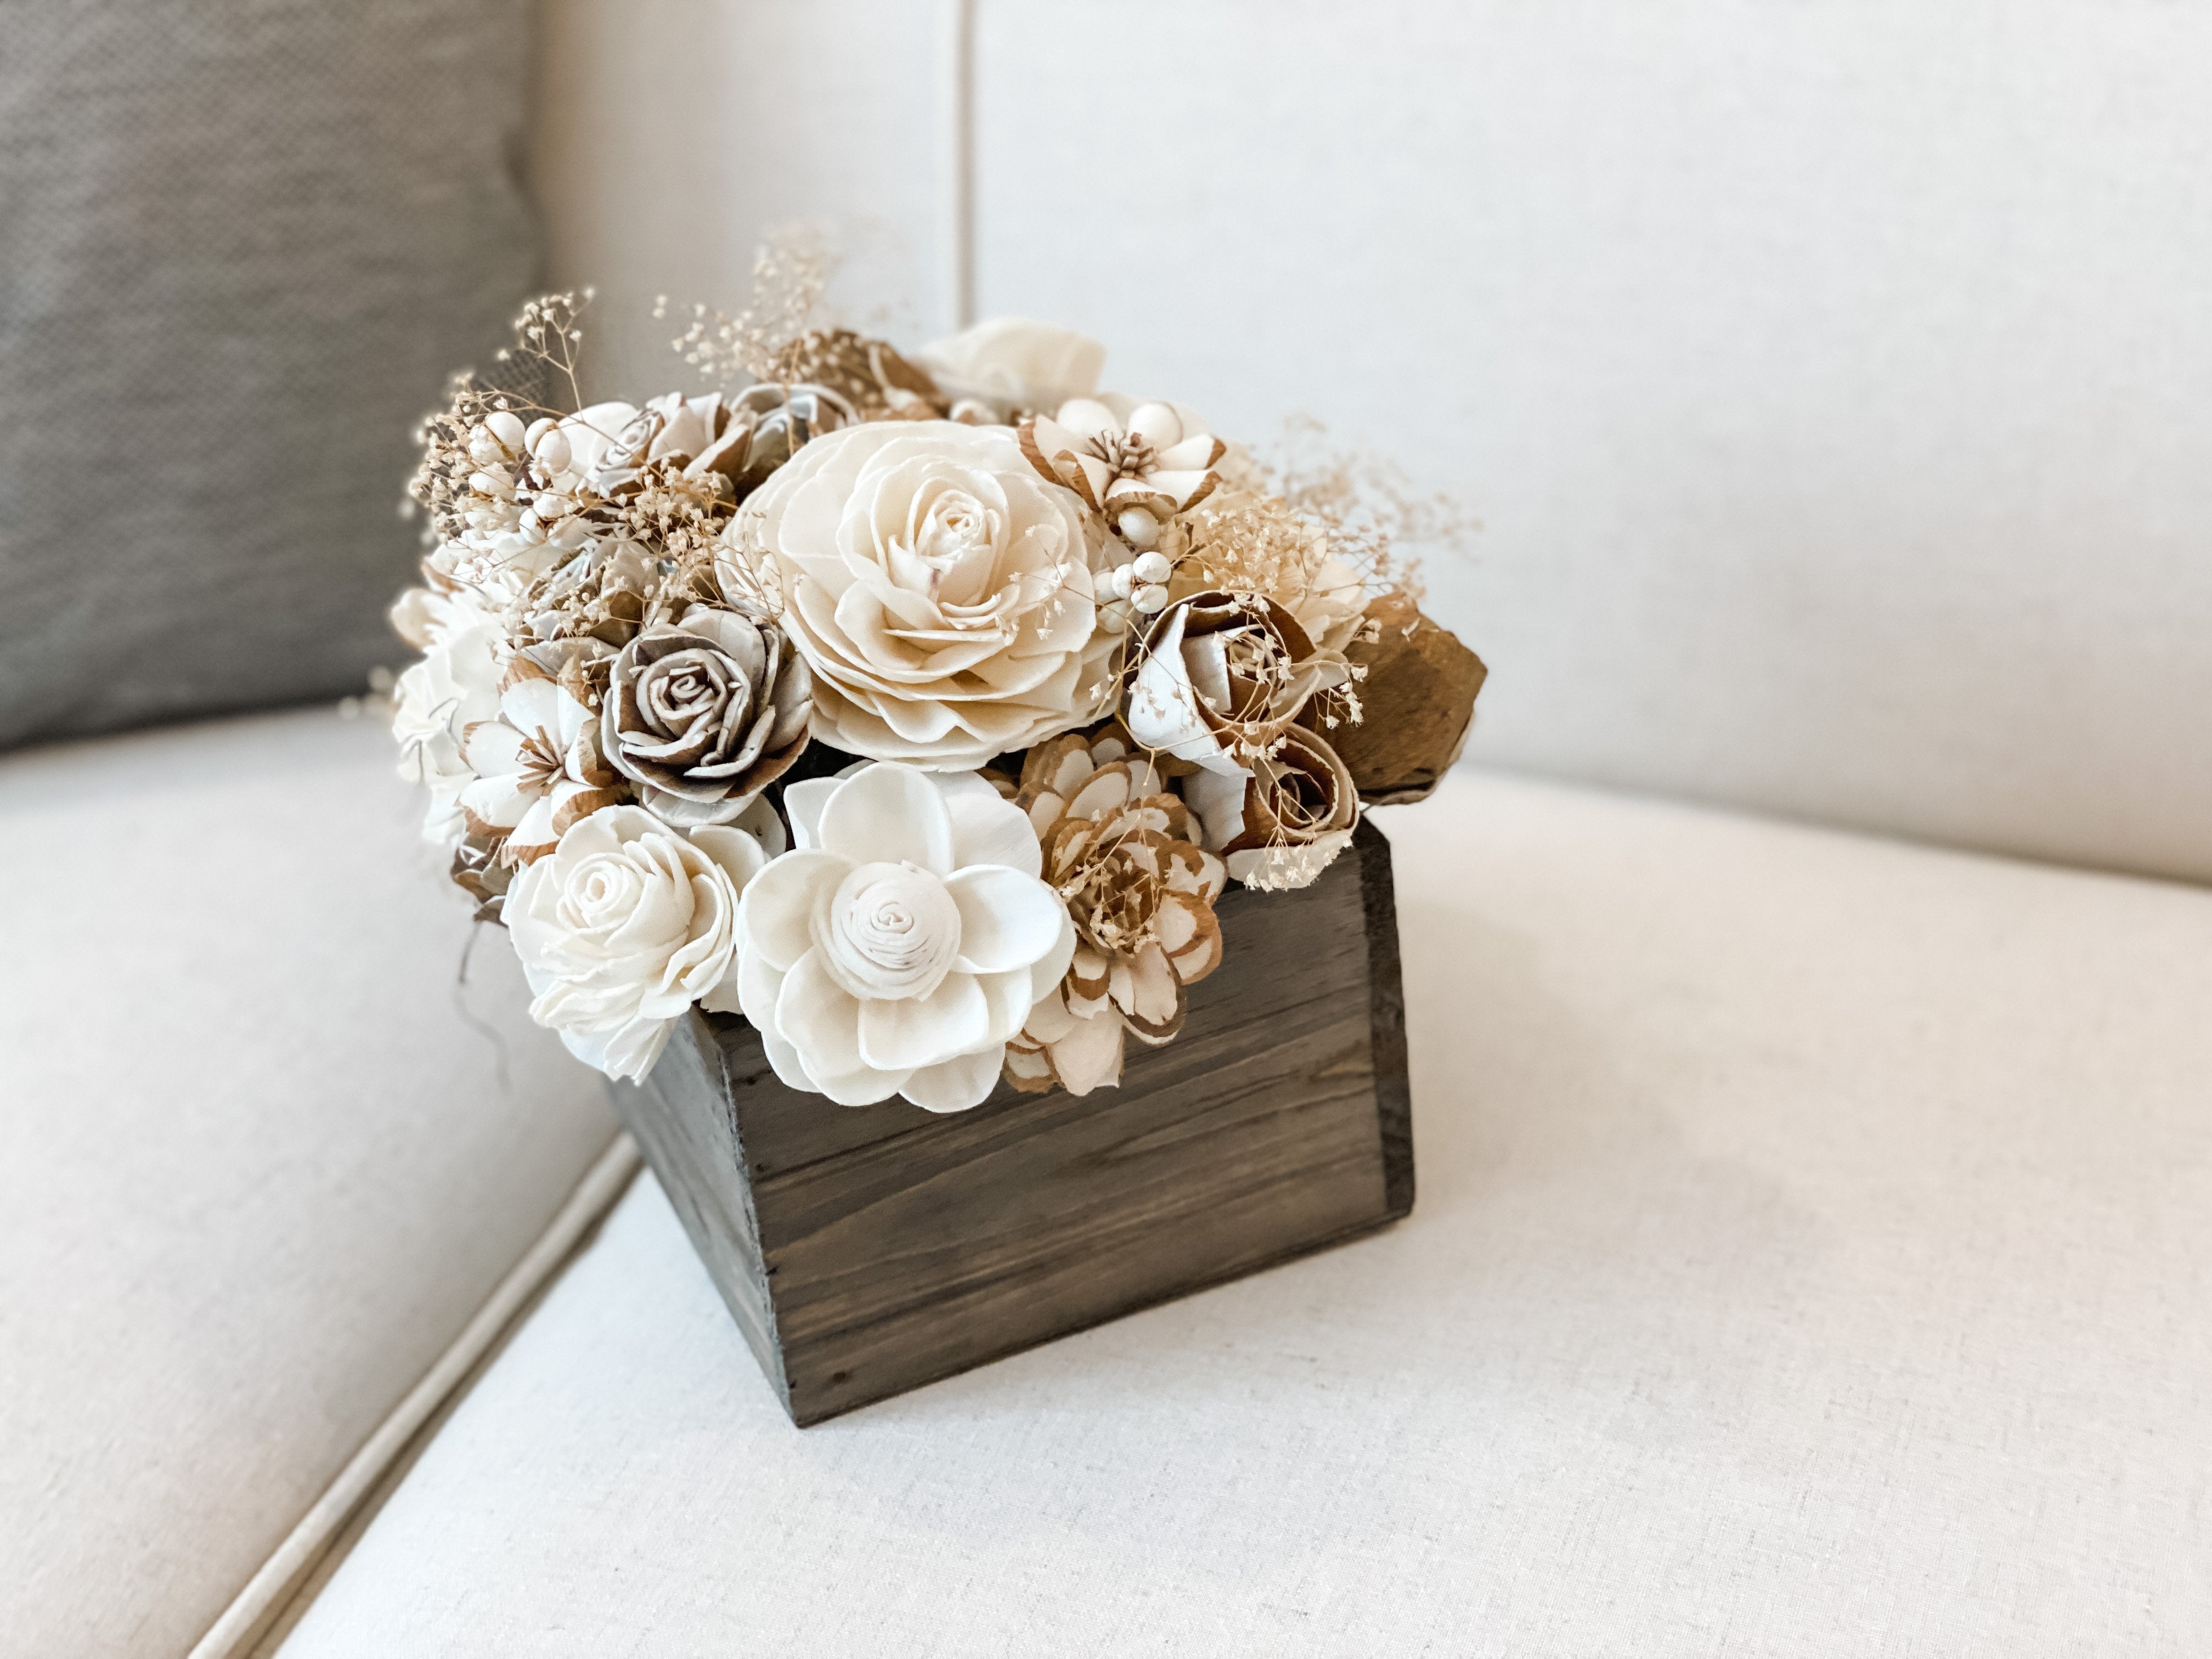 8PC Pink & White Sola Wood Flower Wedding Centerpieces Decor in Rustic  Birch Box